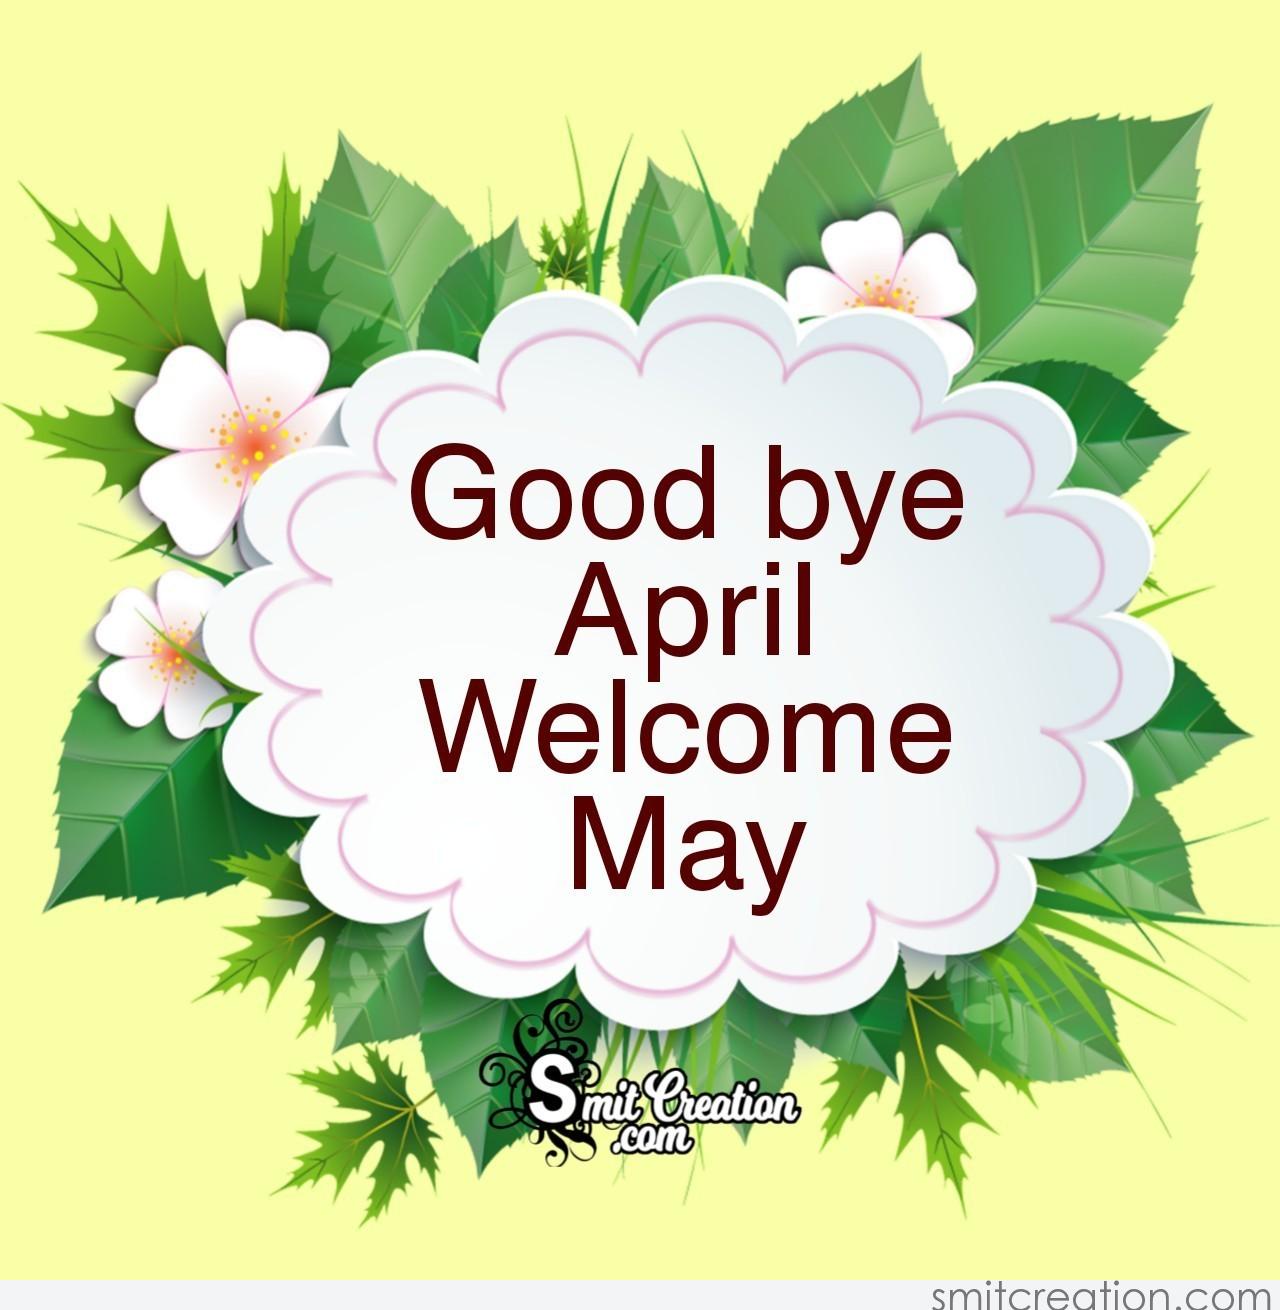 Good bye April Welcome May - SmitCreation.com